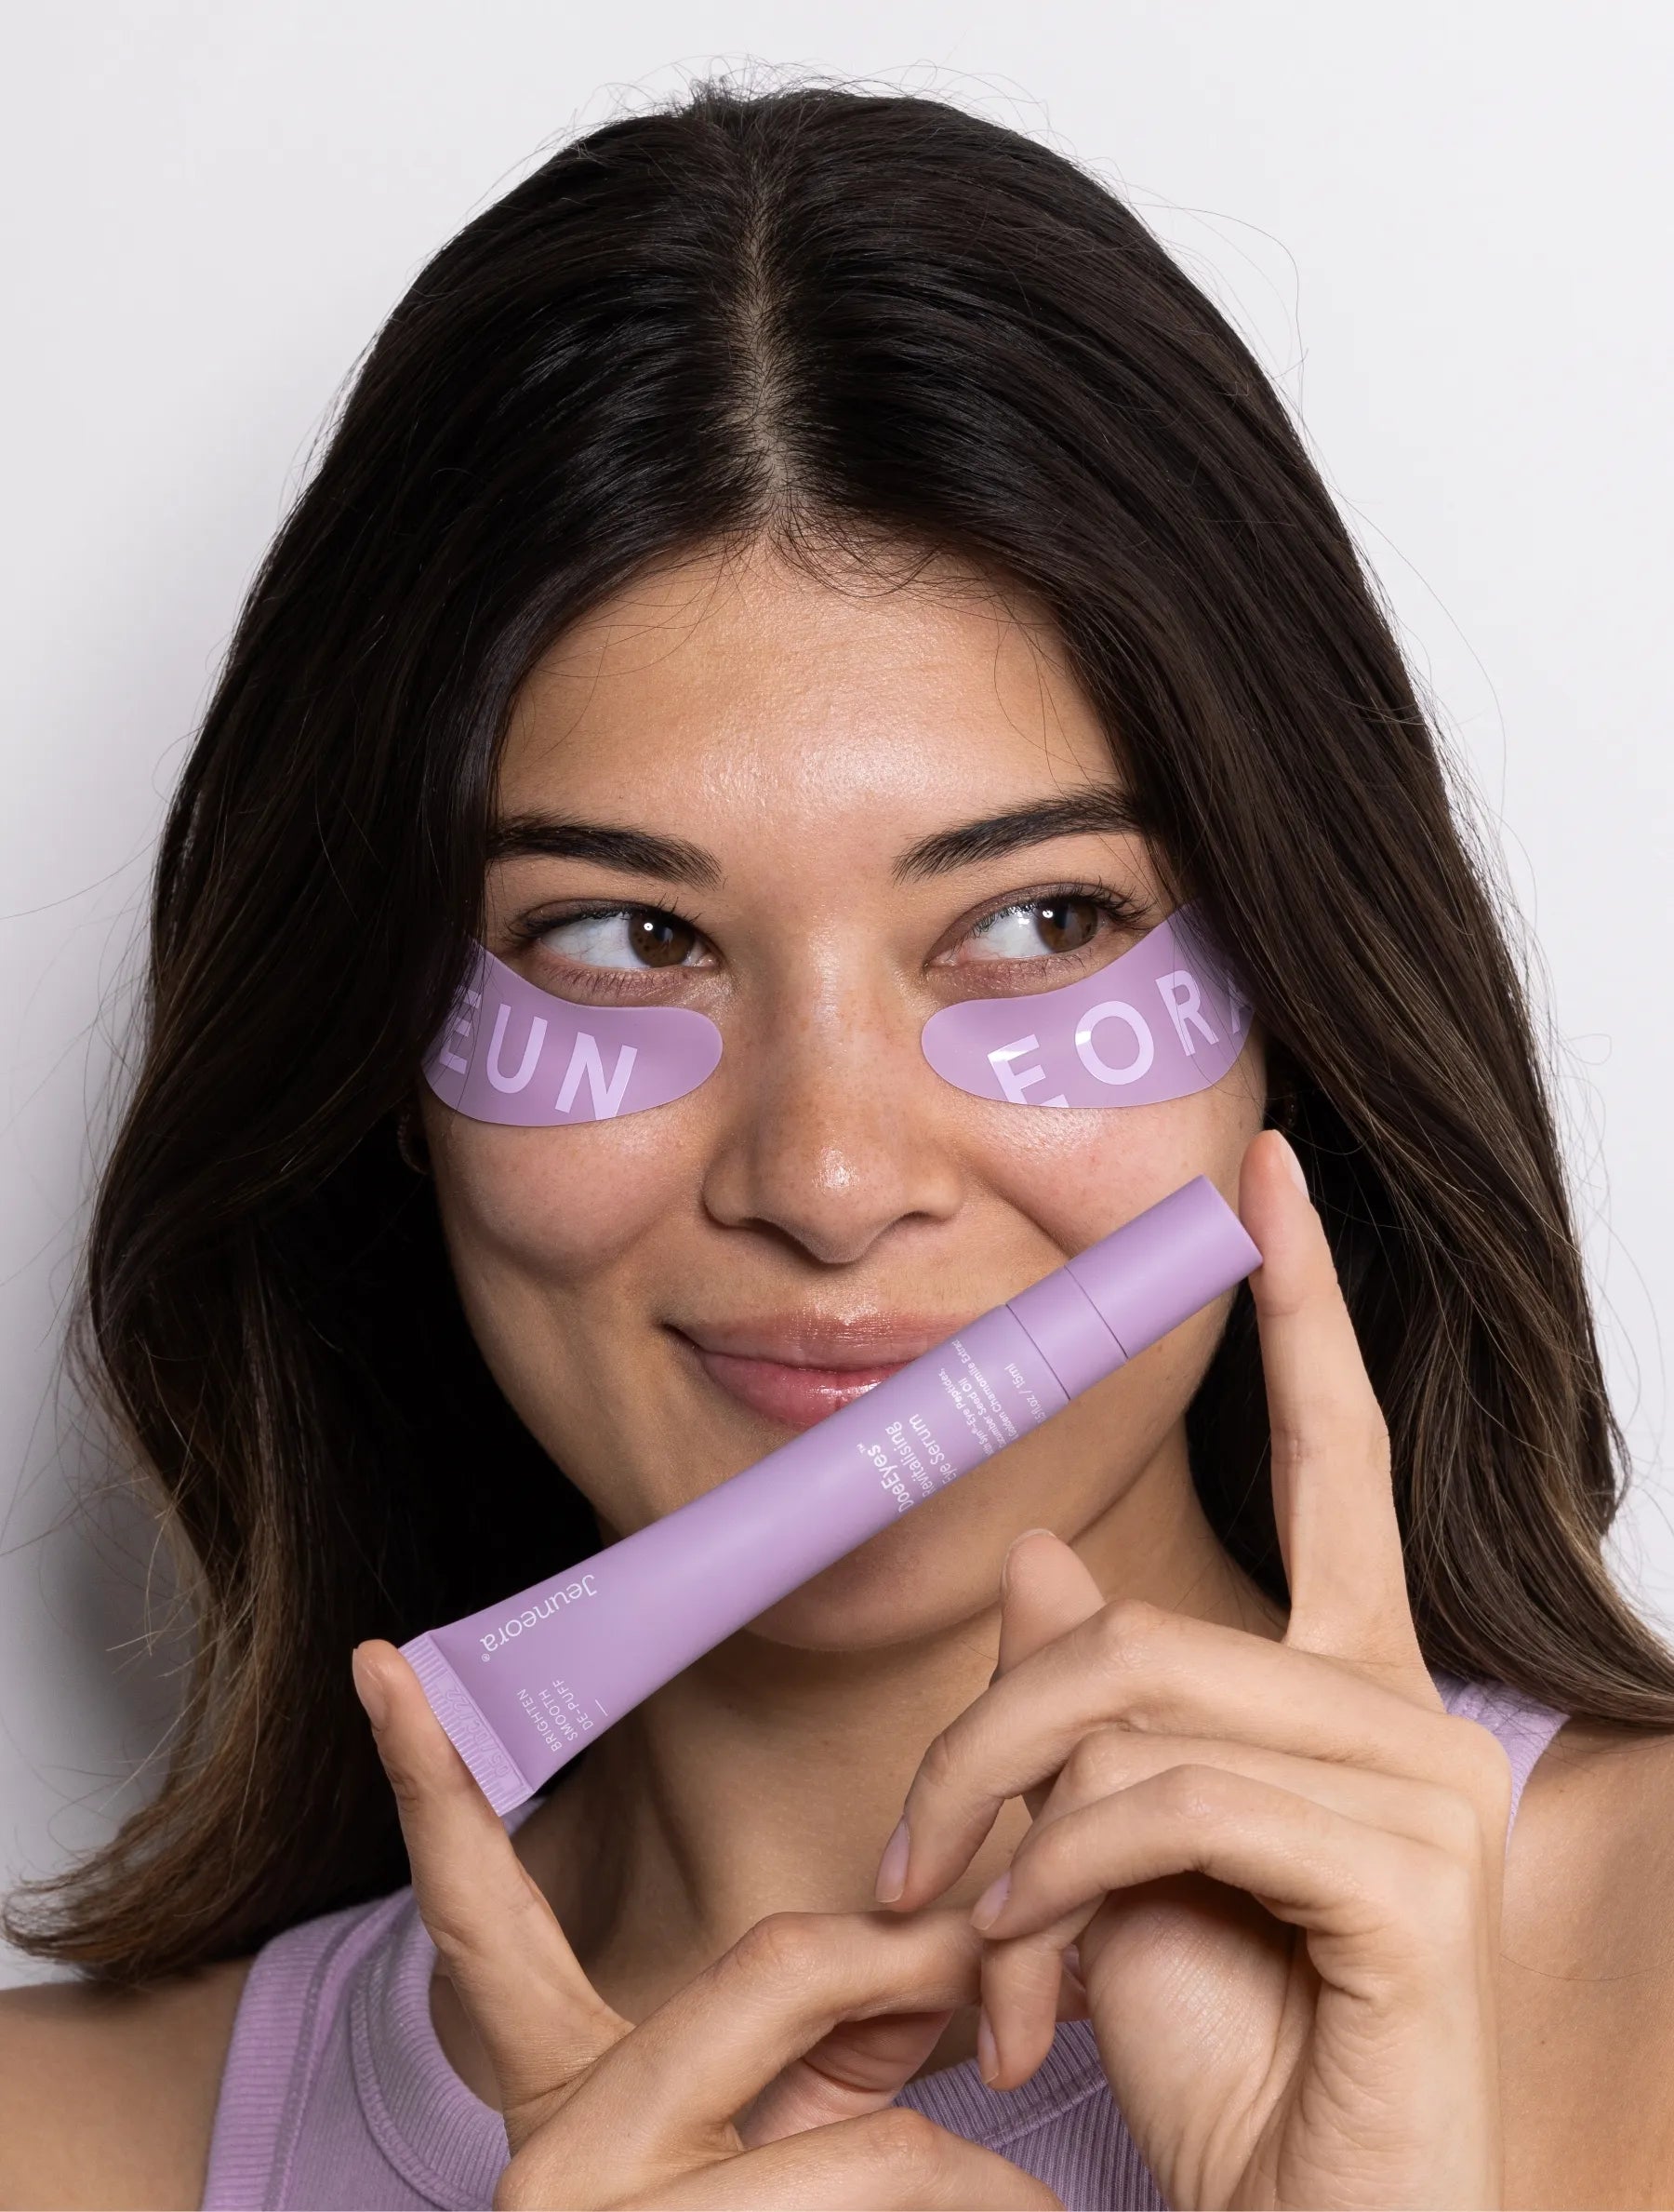 model posing with DoeEyes eye serum and reusable eye masks on purple background